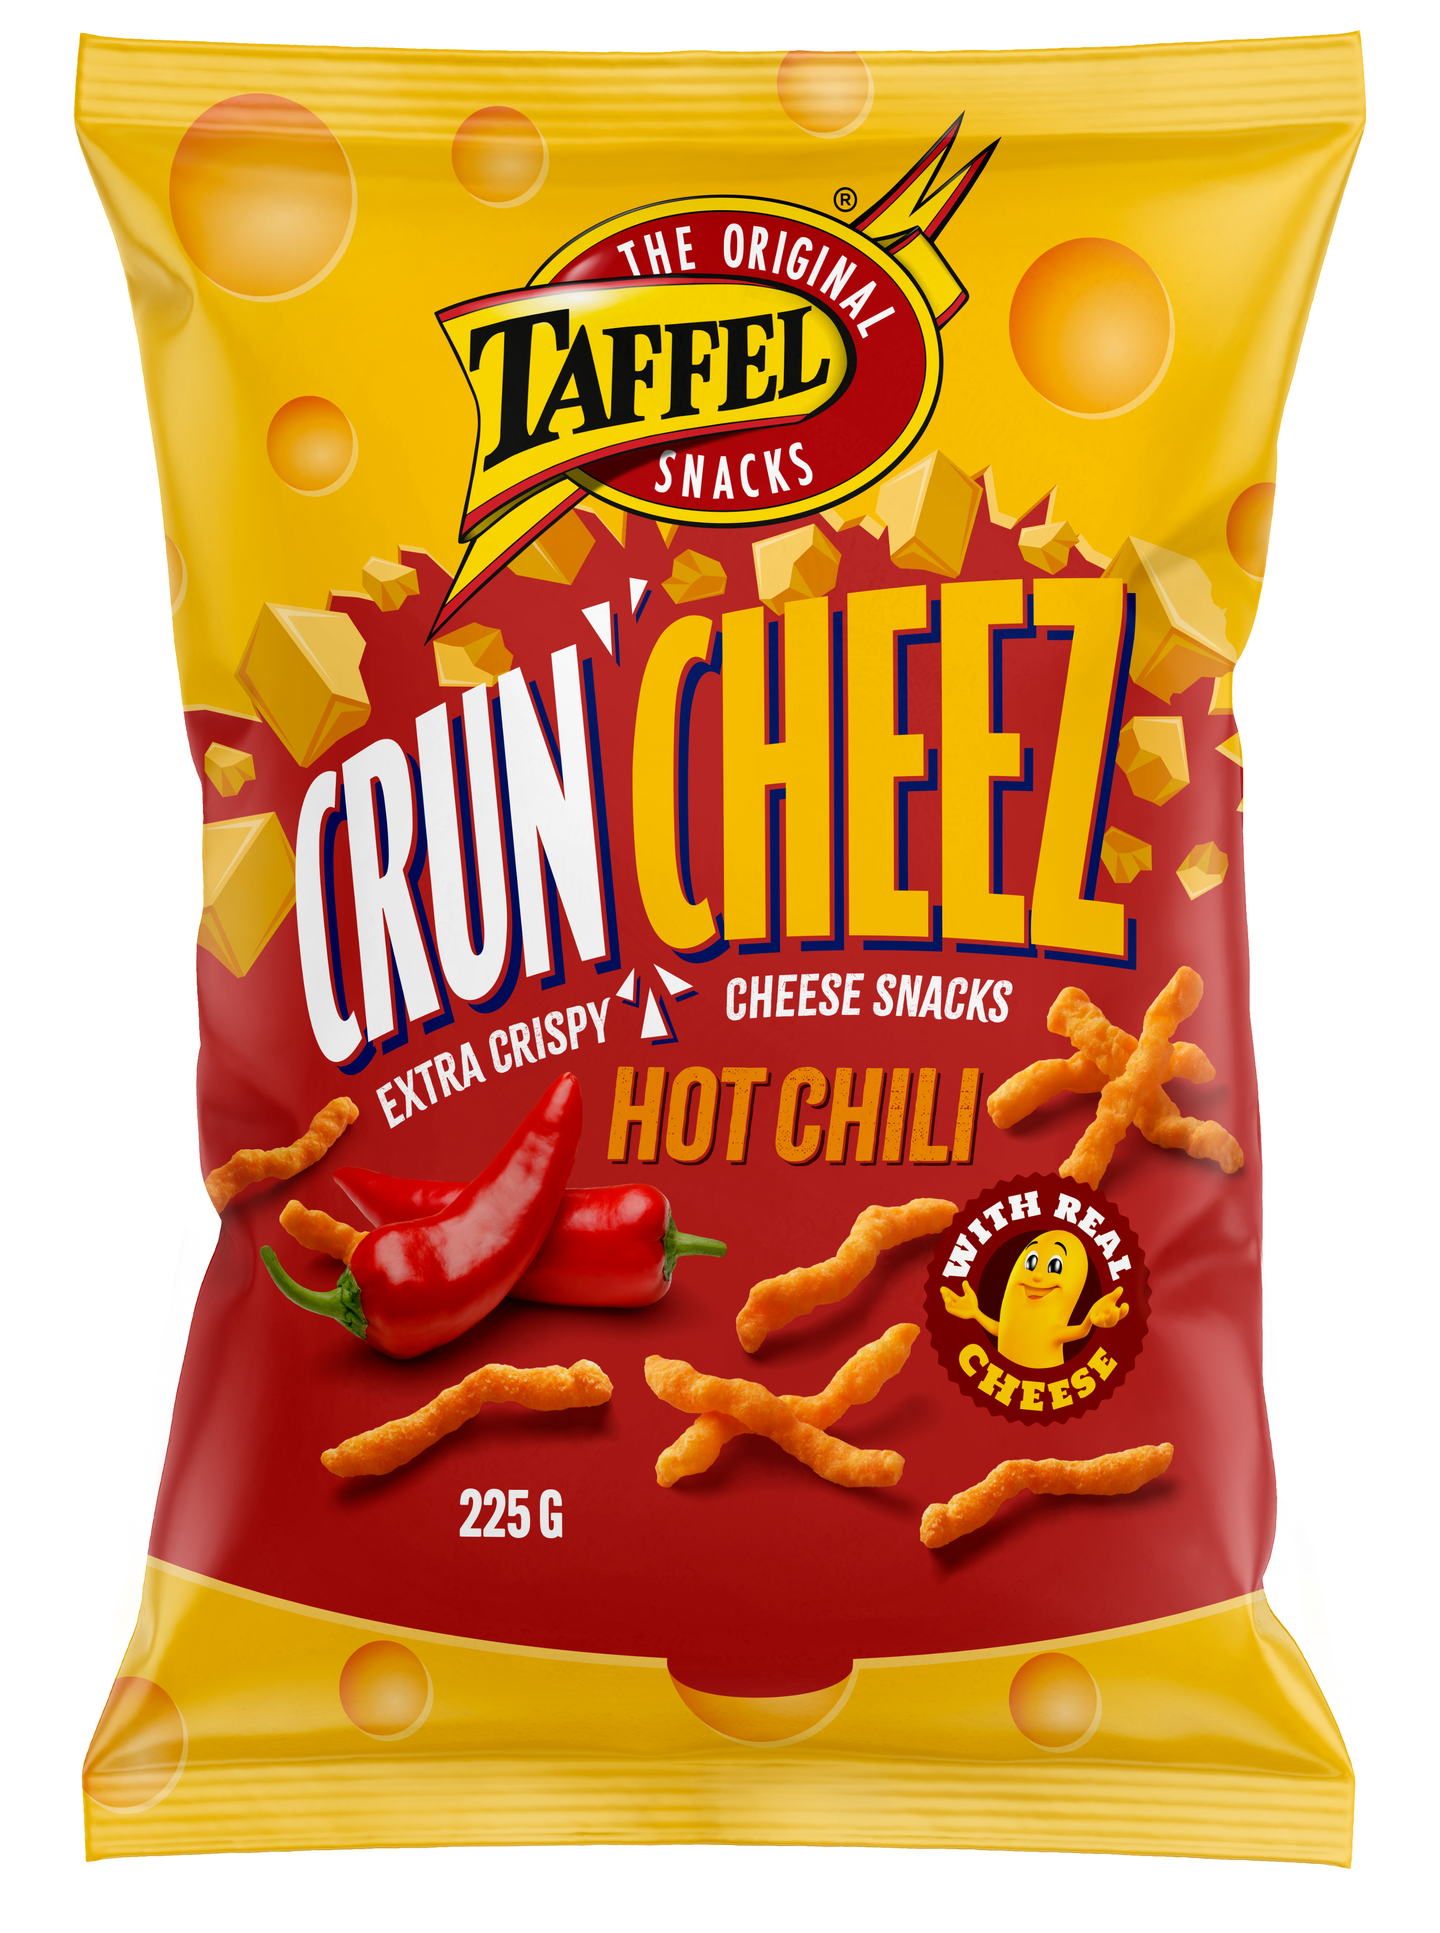 Taffel CrunCheez 225g Hot Chili